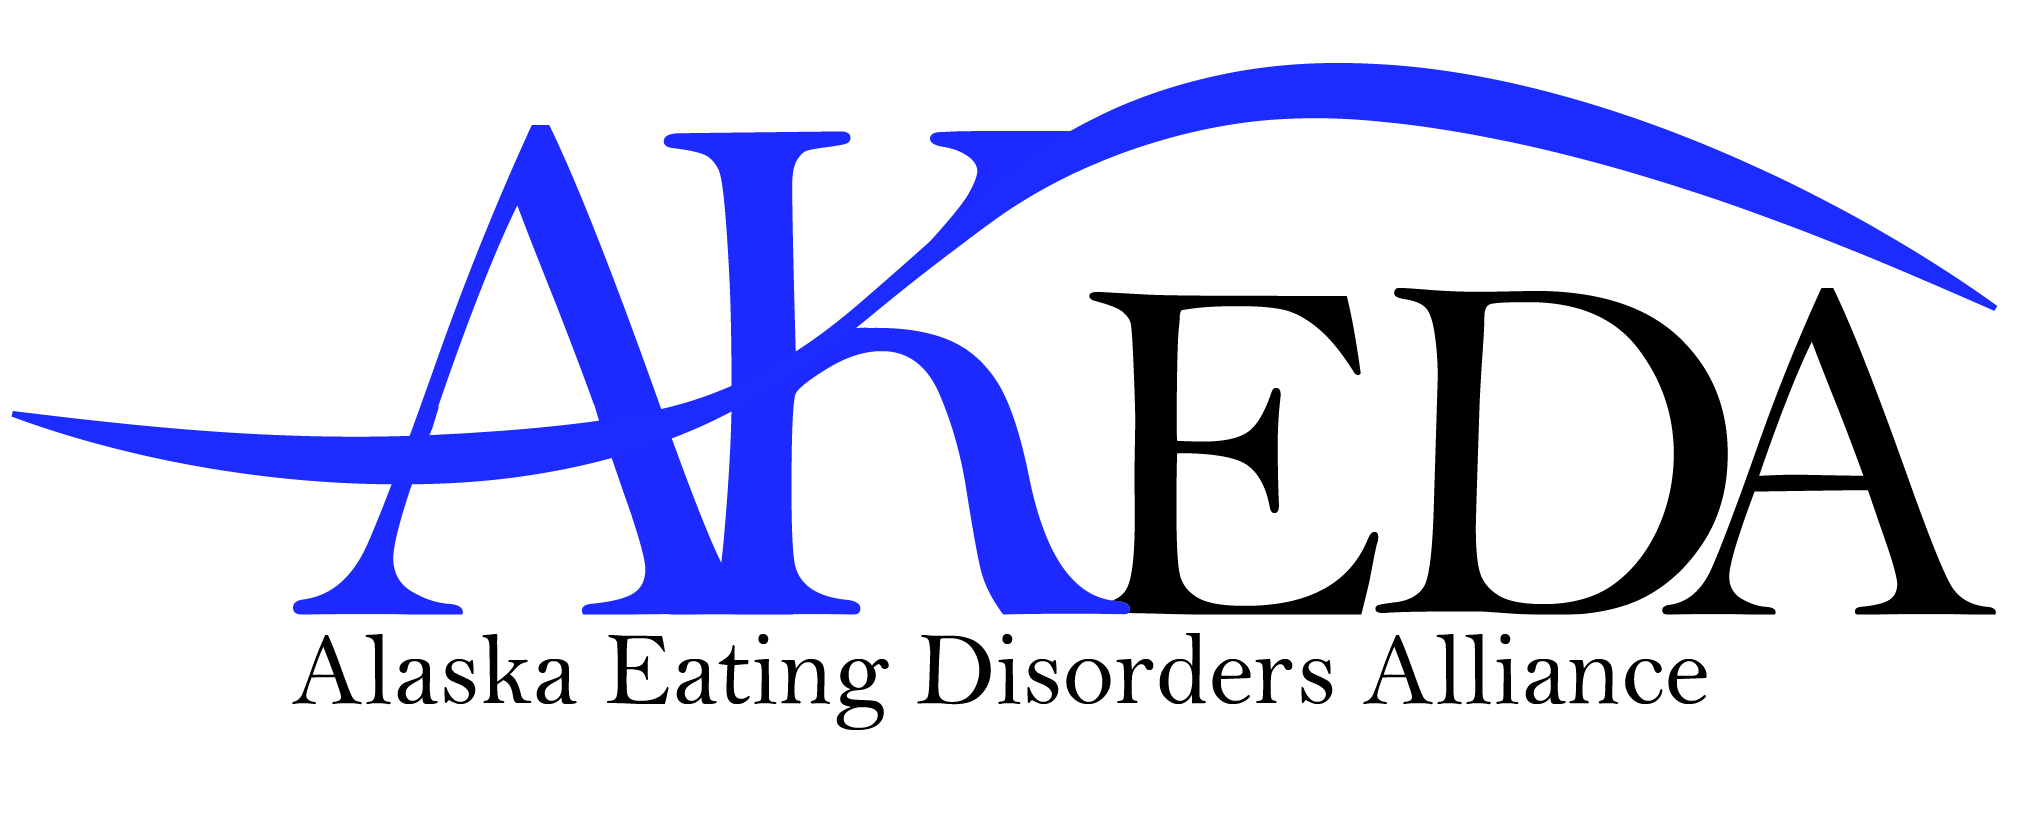 Alaska Eating Disorders Alliance logo